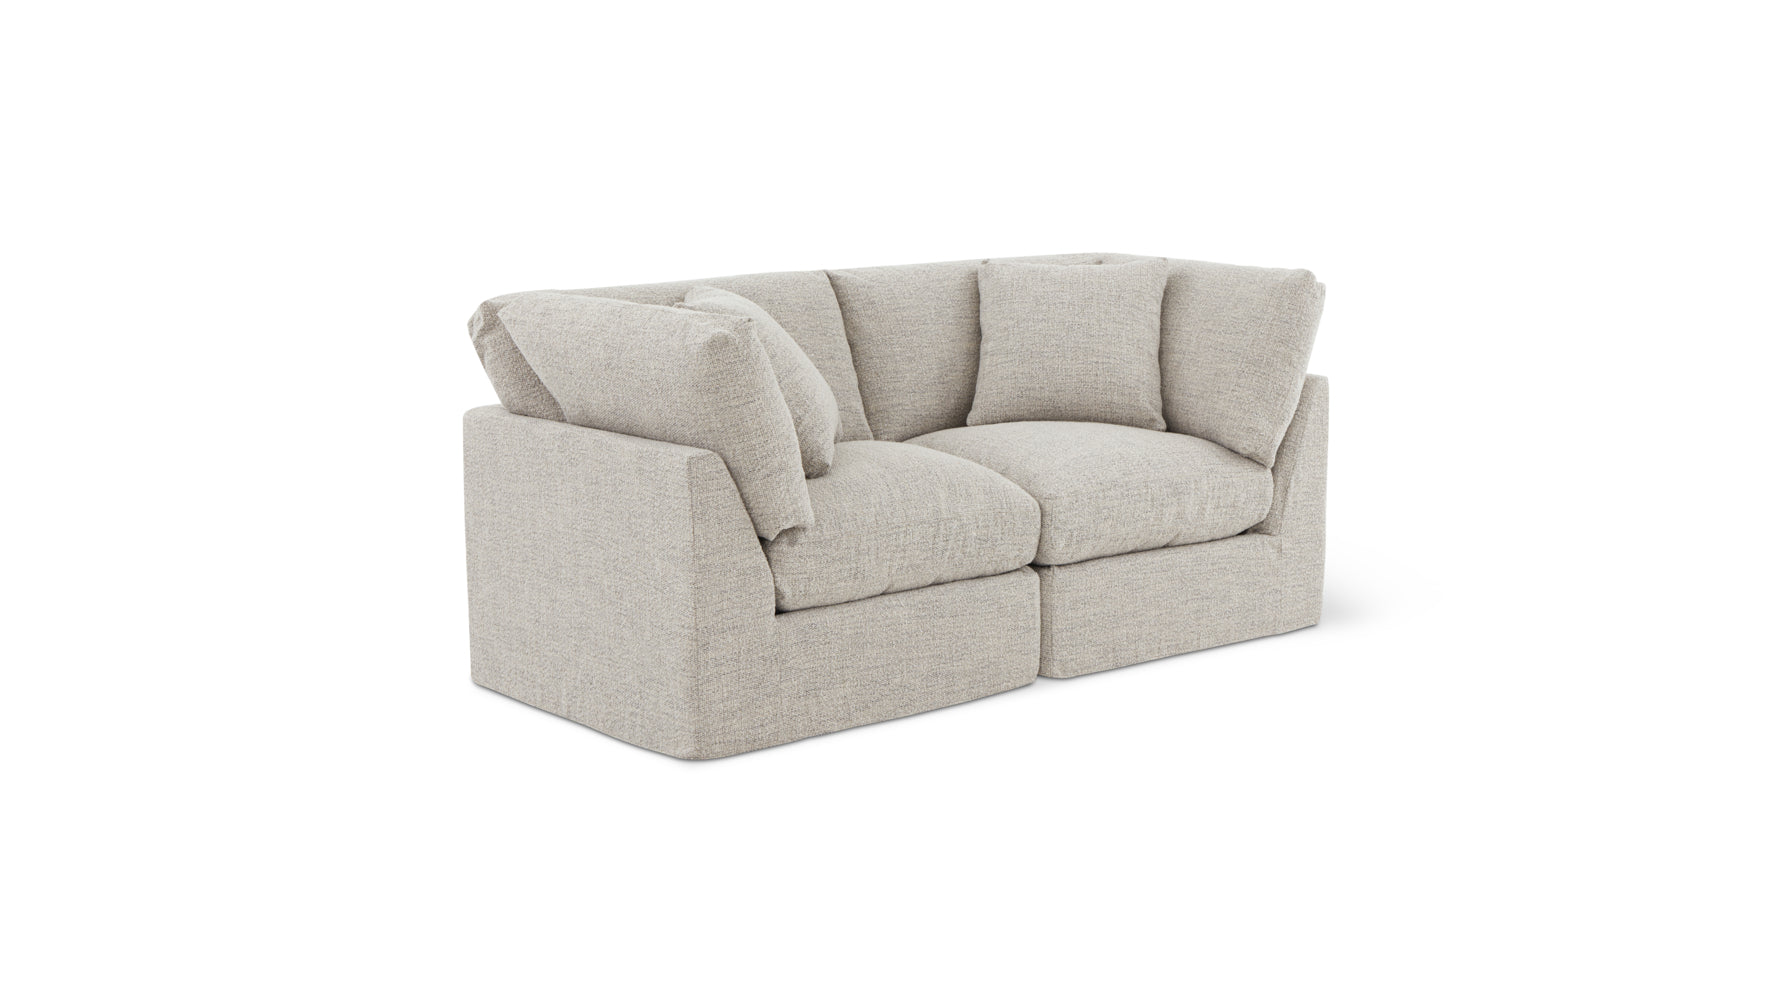 Get Together™ 2-Piece Modular Sofa, Standard, Oatmeal - Image 3